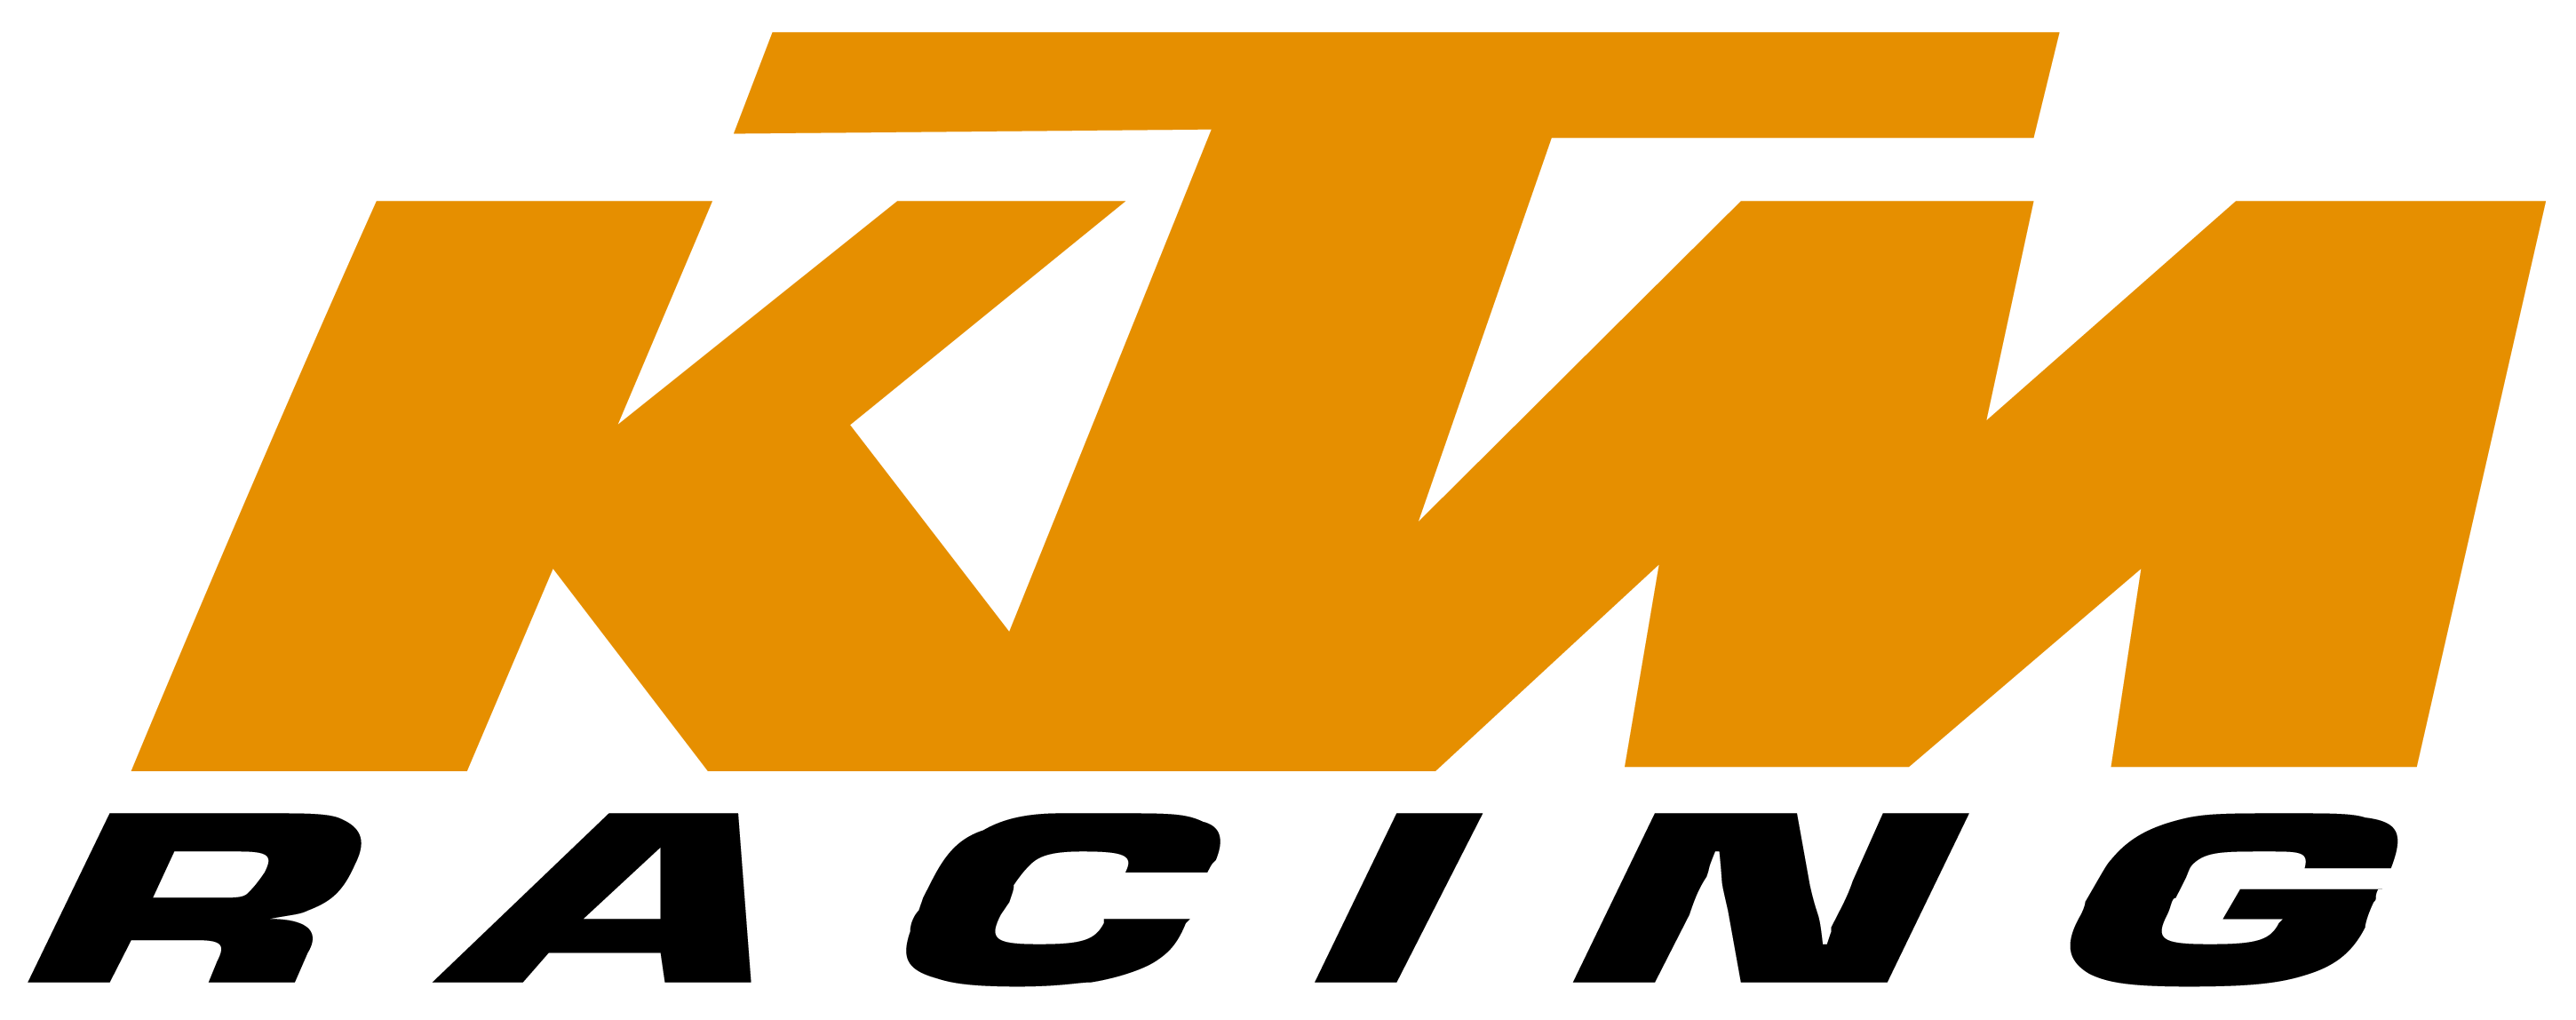 KTM Logo - KTM logo